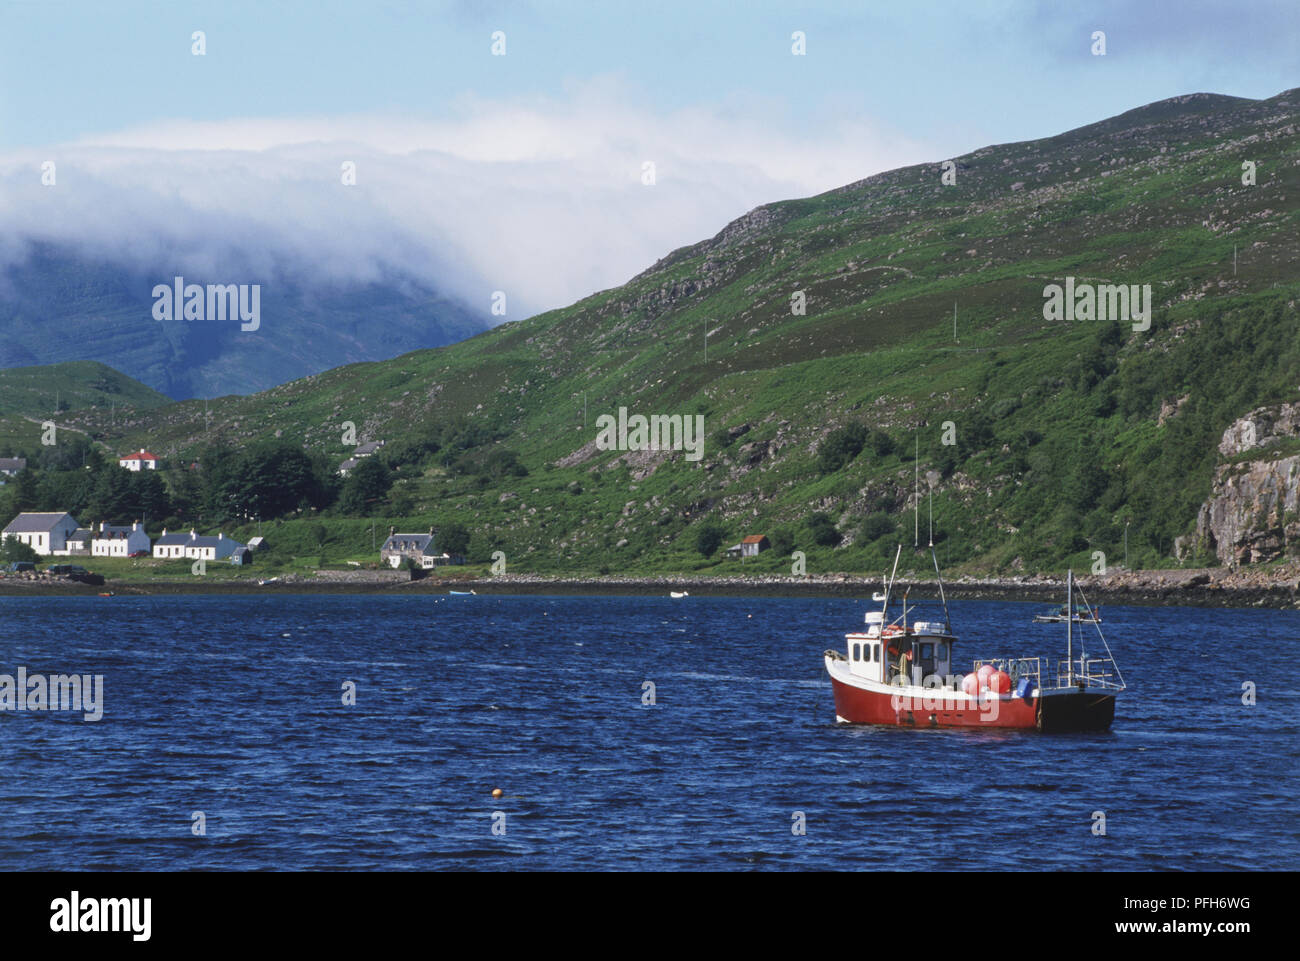 Great Britain, Scotland, red and white boat near mountainous coastline Stock Photo